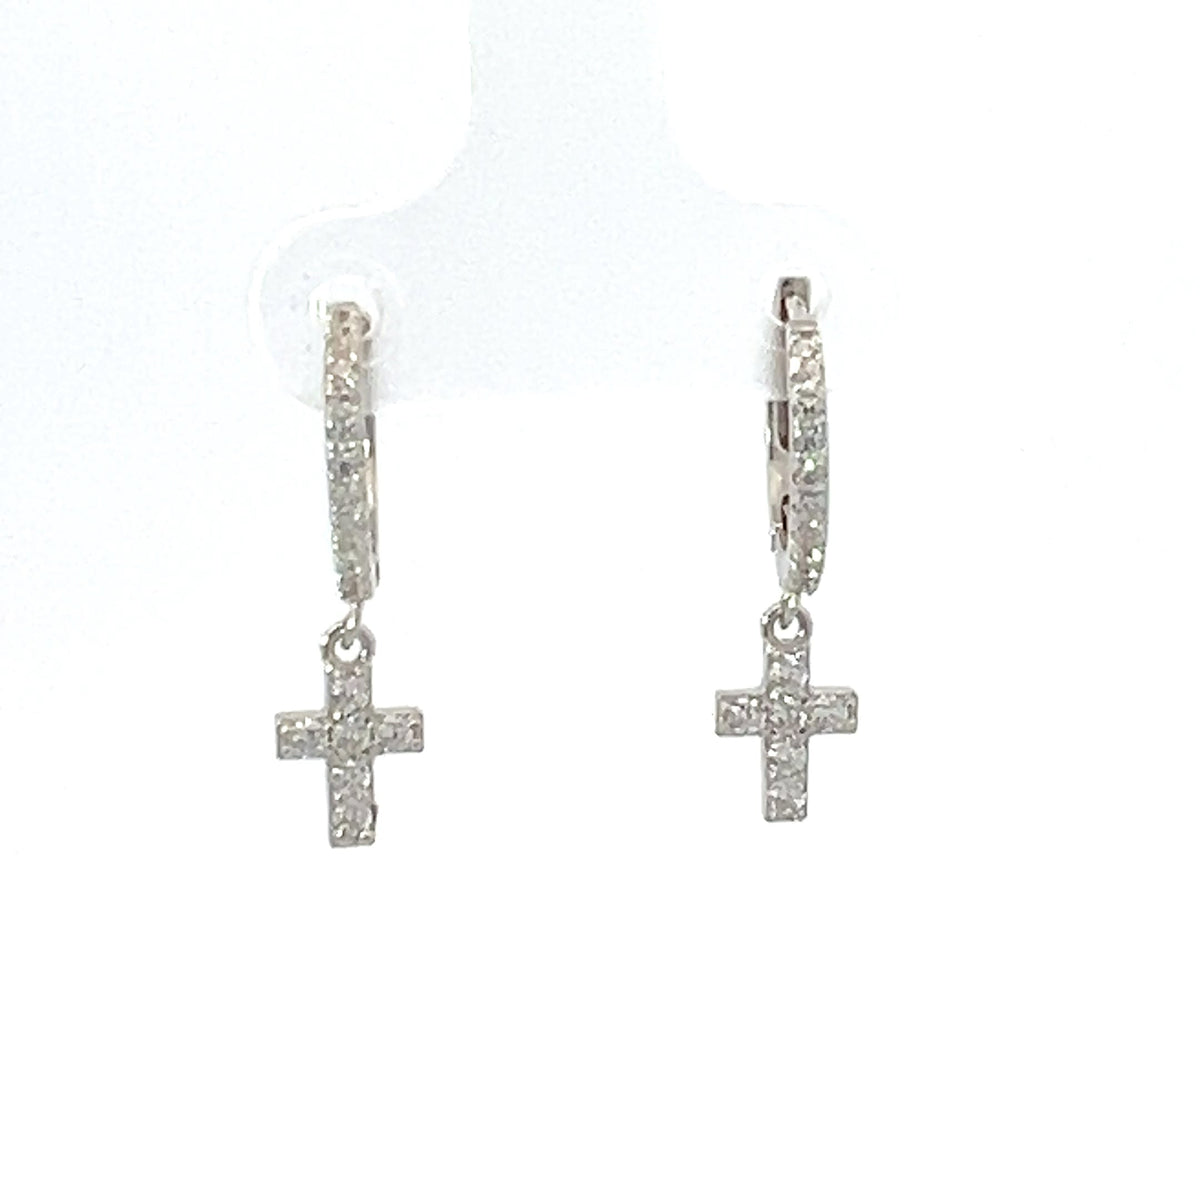 925 Silver Earrings Cubic Zirconia Huggies with Dangling Cross with Cubic Zirconia